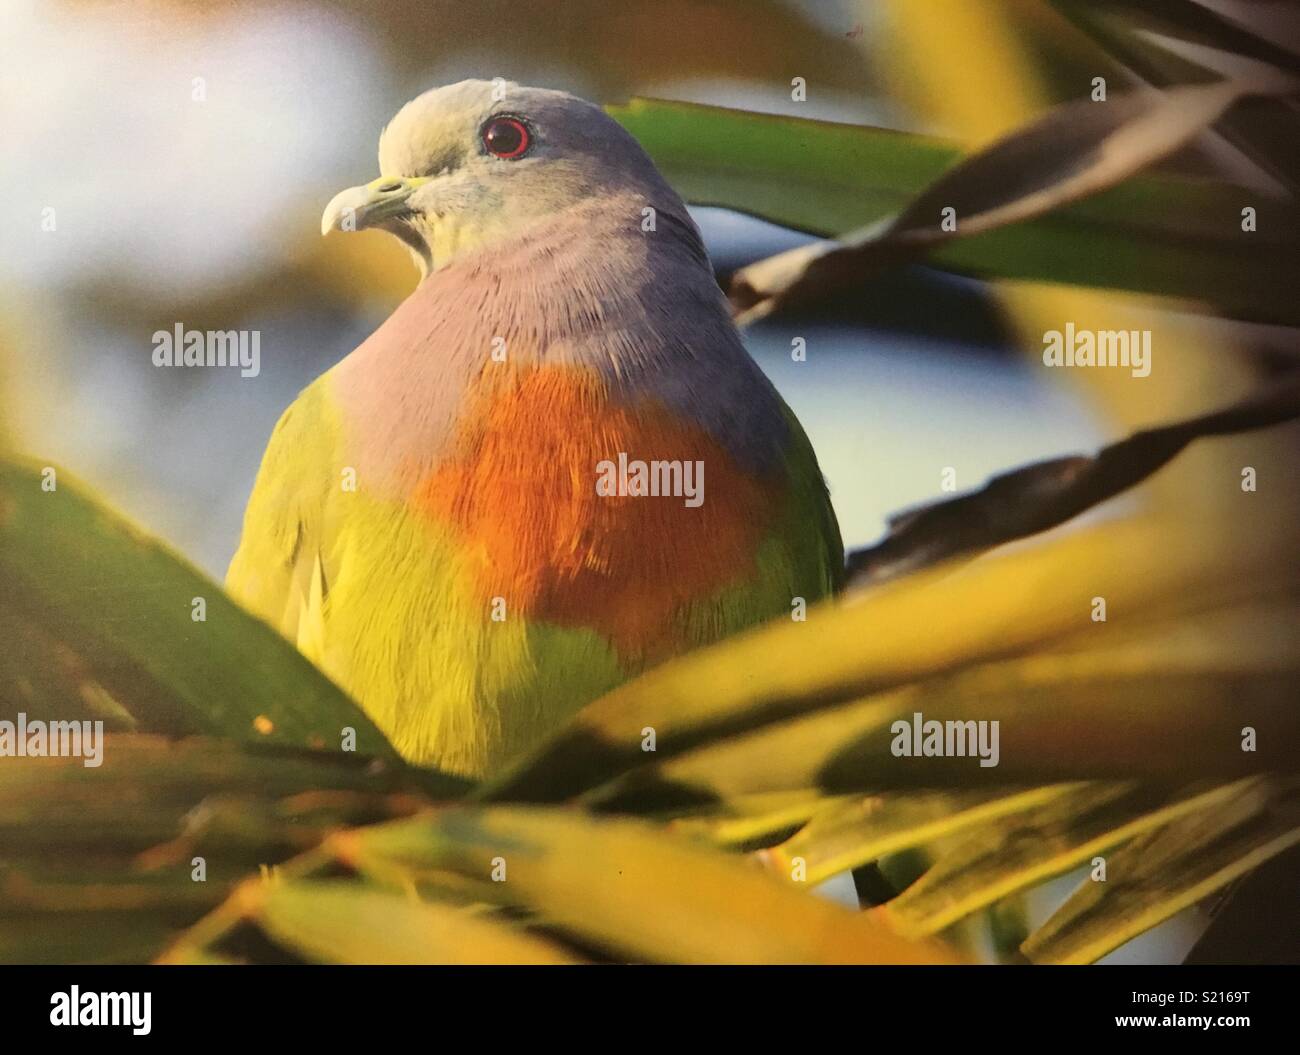 Colourful bird Stock Photo